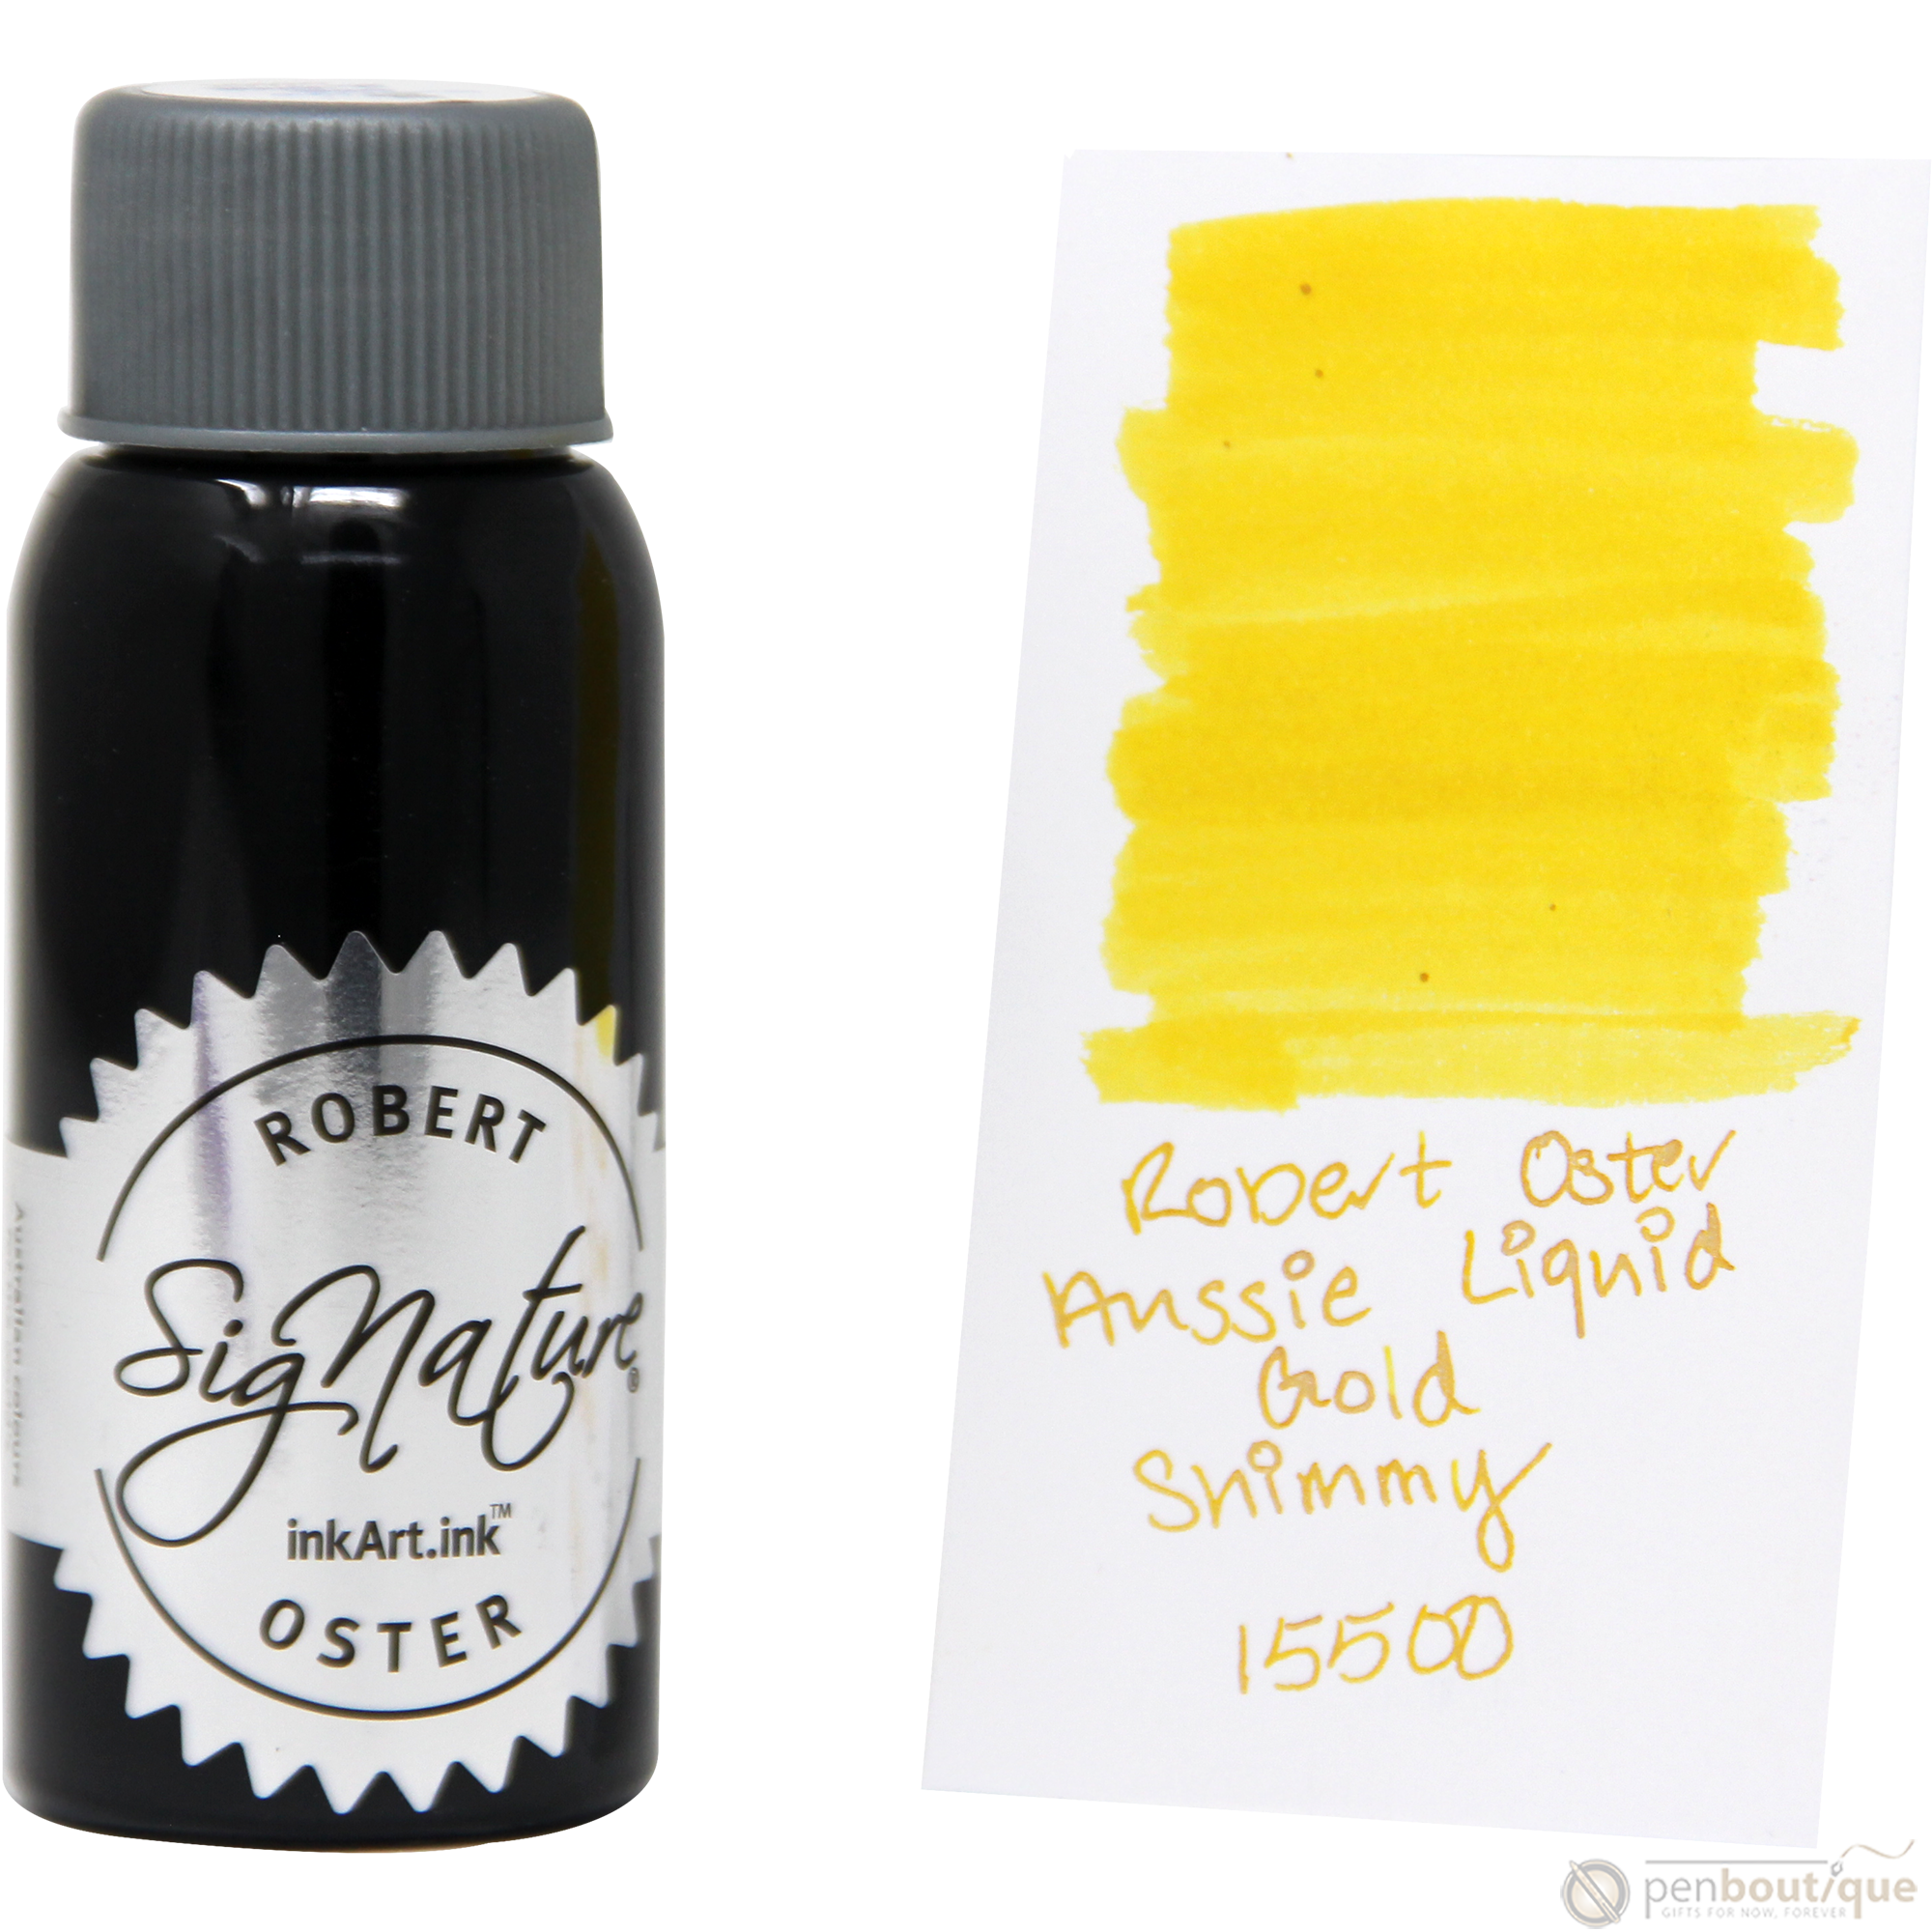 Robert Oster Shake'N'Shimmy Ink Bottle - Aussie Liquid Gold - 50ml-Pen Boutique Ltd